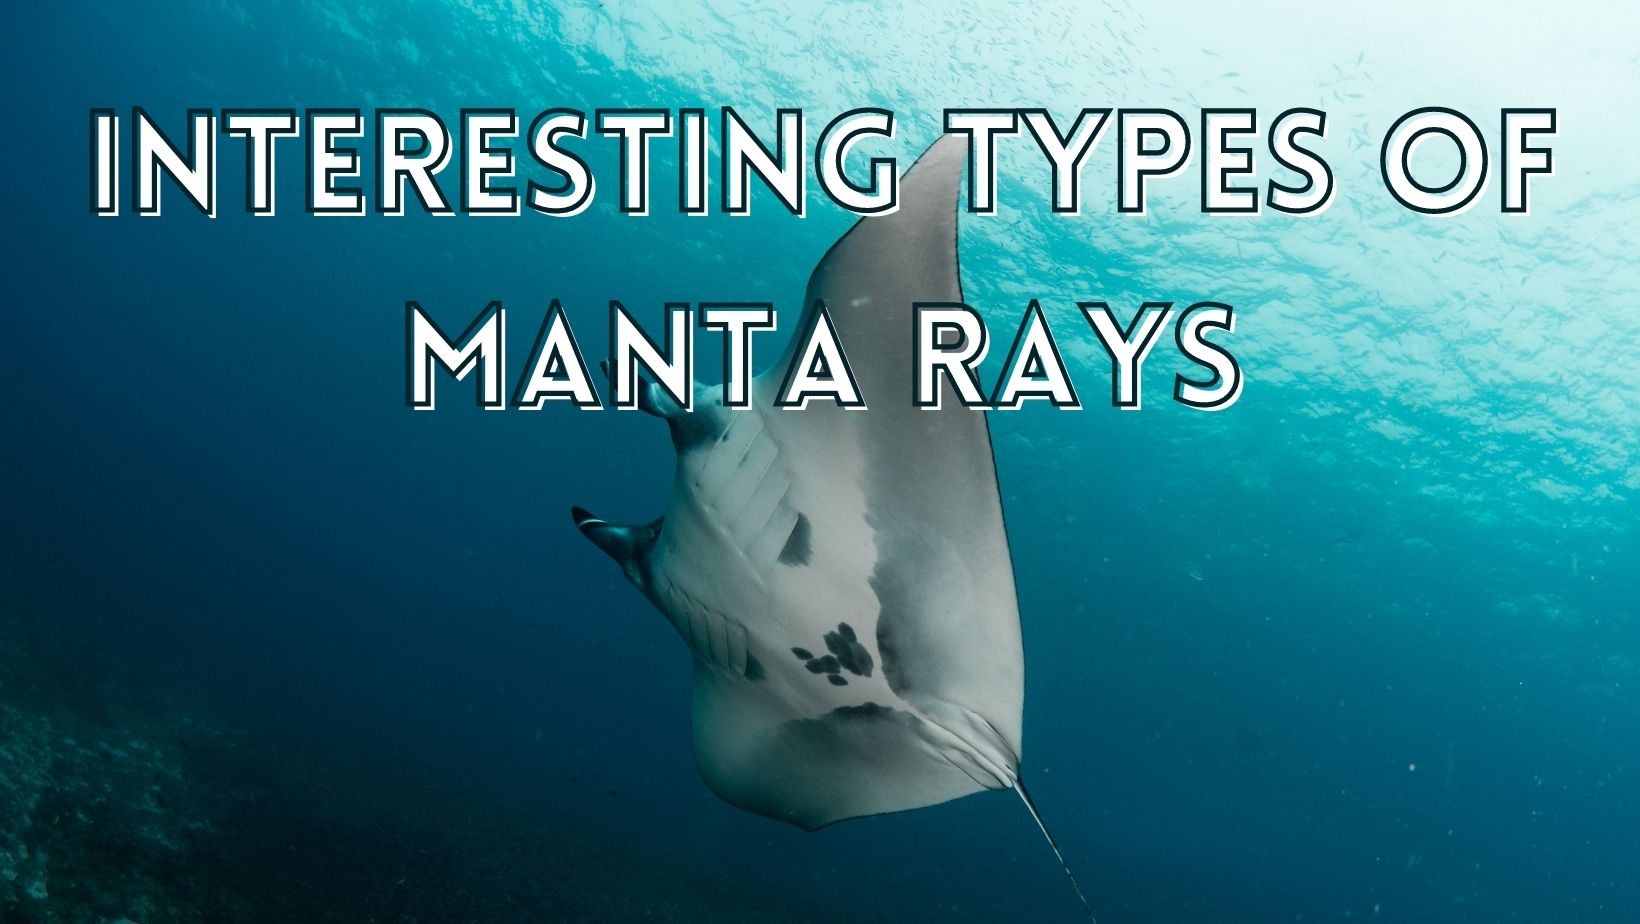 Fascinating types of manta rays